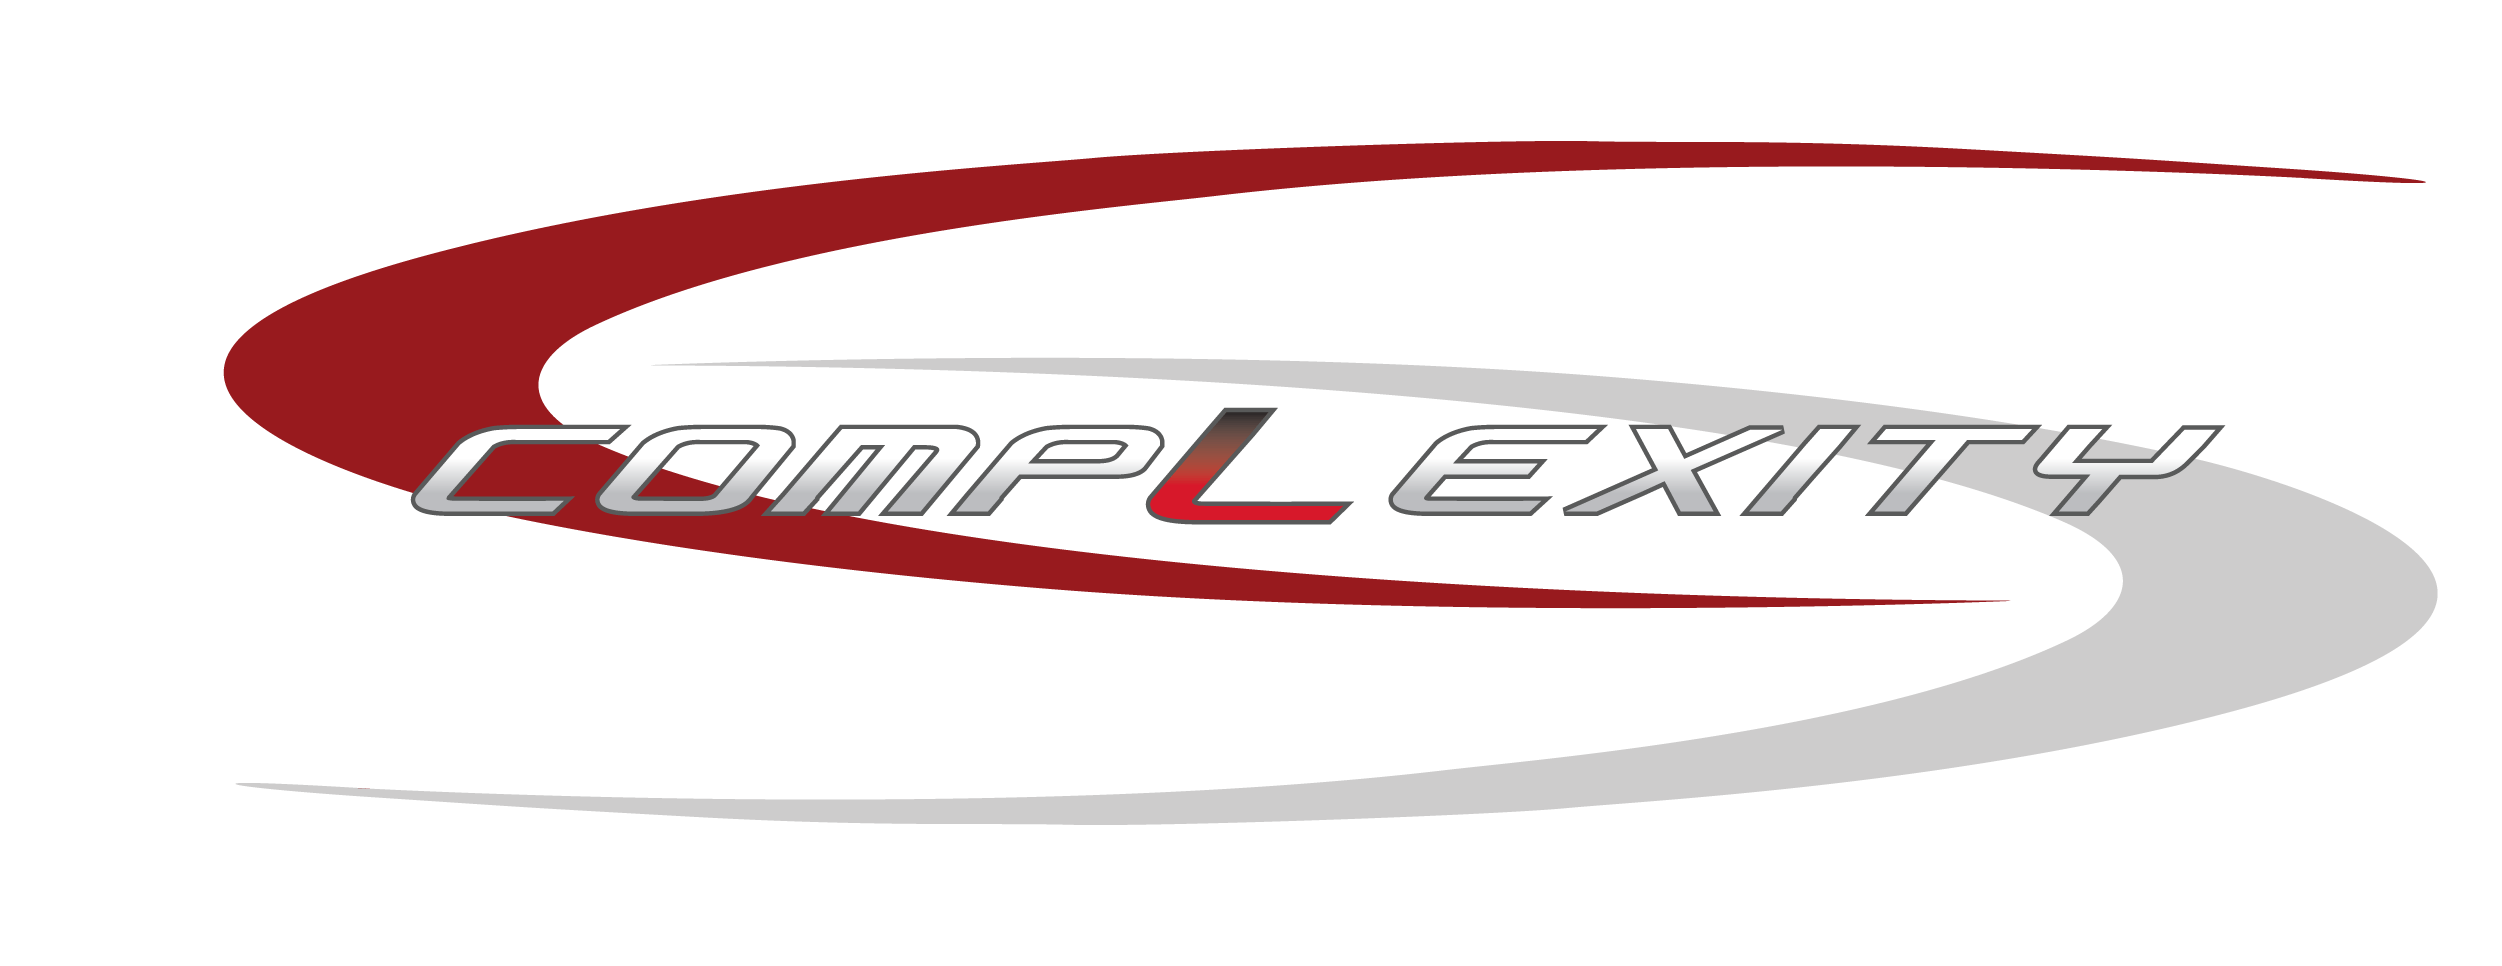 Col Logo - CompLexity announces a new team for League of Legends - GameSpot